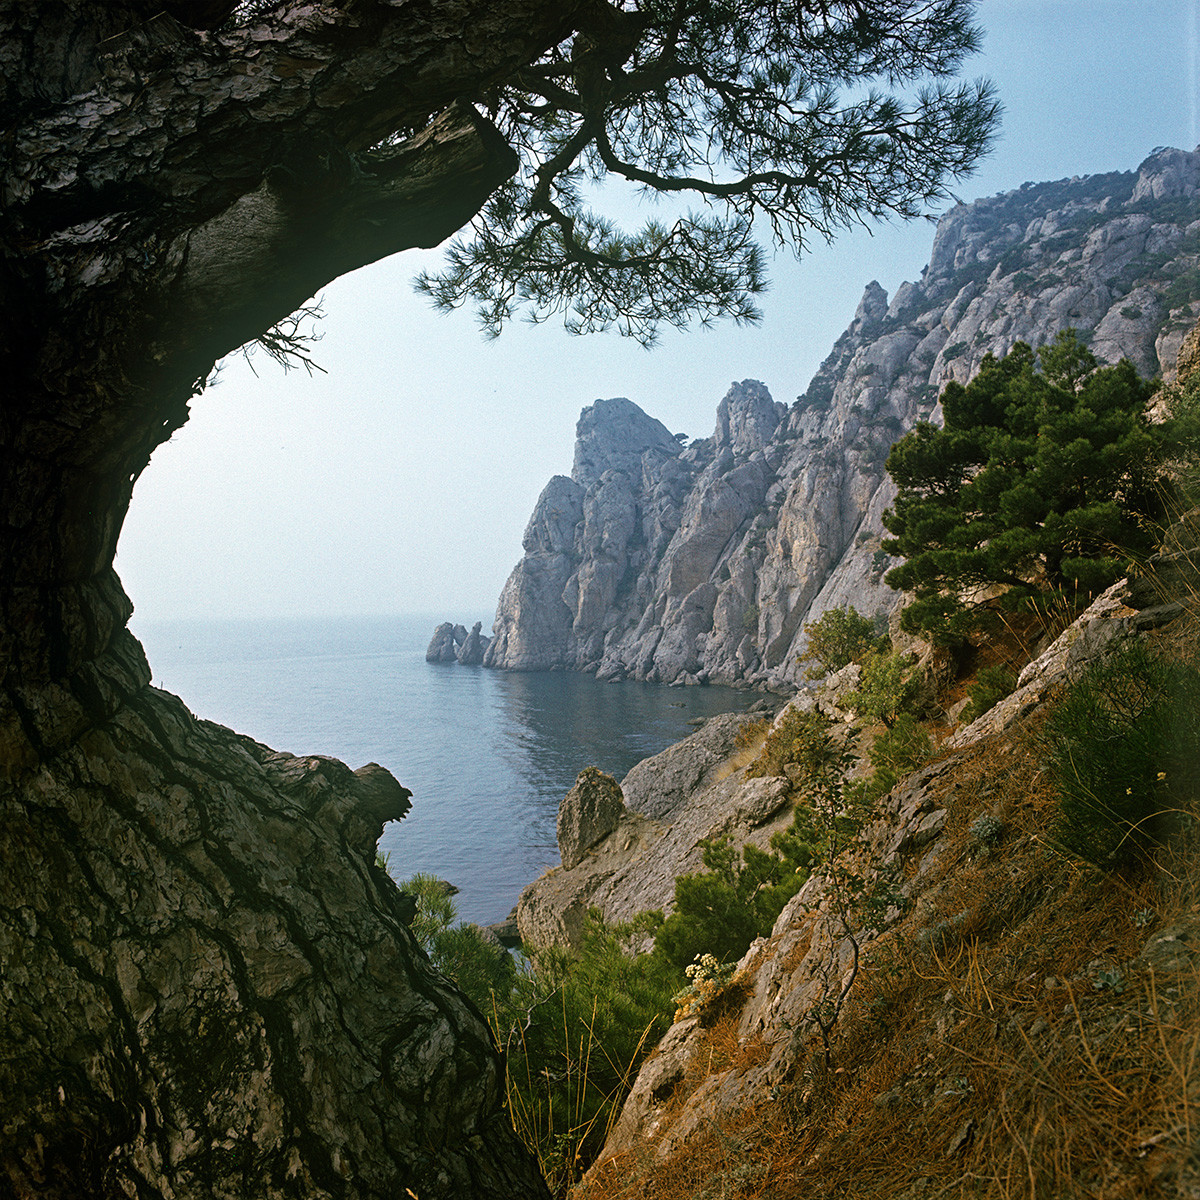 Narava na južni obali Krima, 1981

